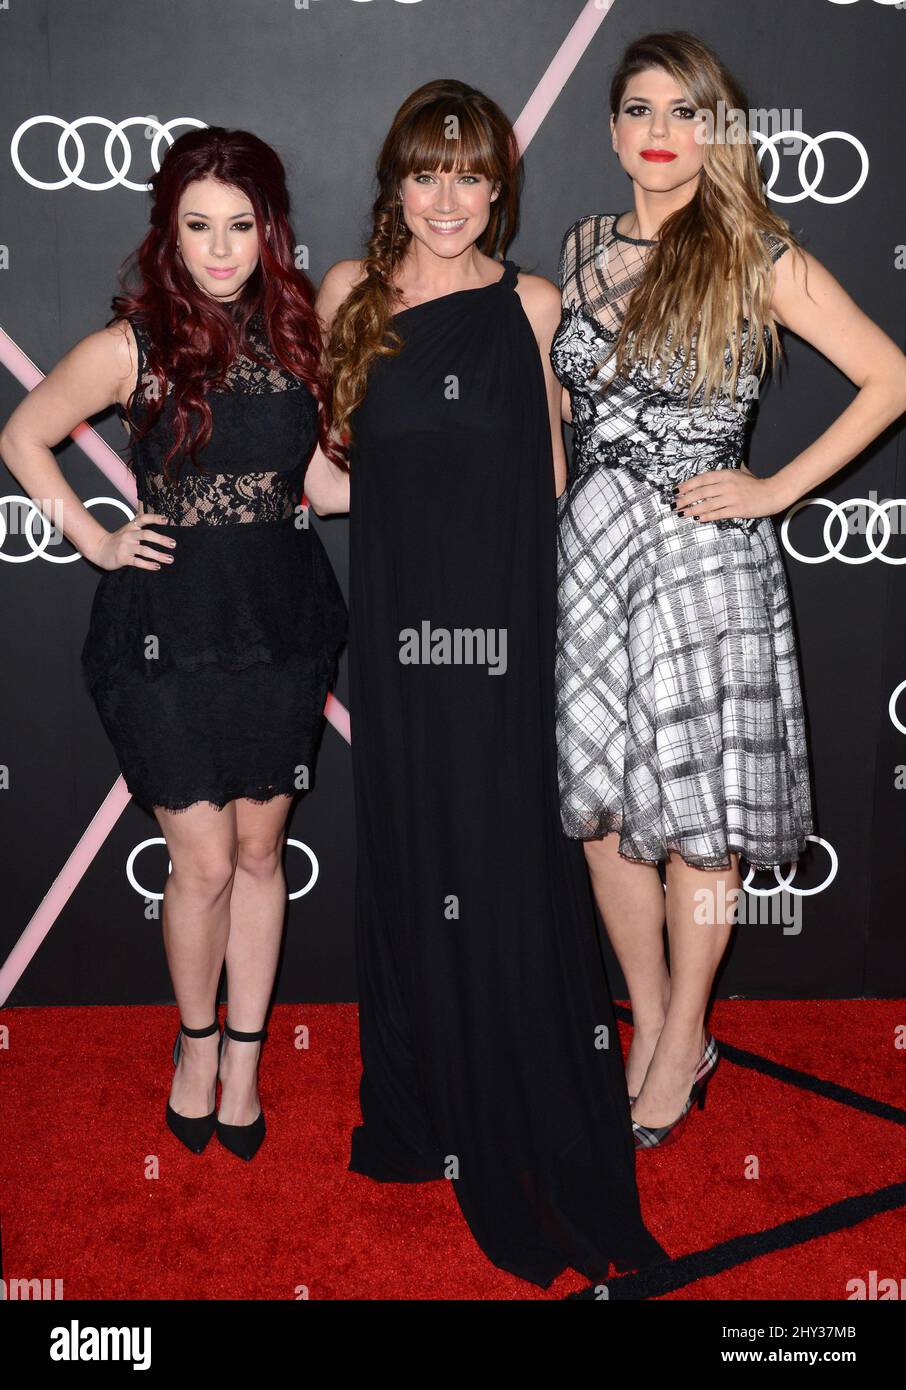 Jillian Rose Reed, Nikki DeLoach, Molly Tarlov bei der Audi Golden Globes 2014 Cocktail Party, die in Cecconis West Hollywood, Kalifornien, stattfand. Stockfoto